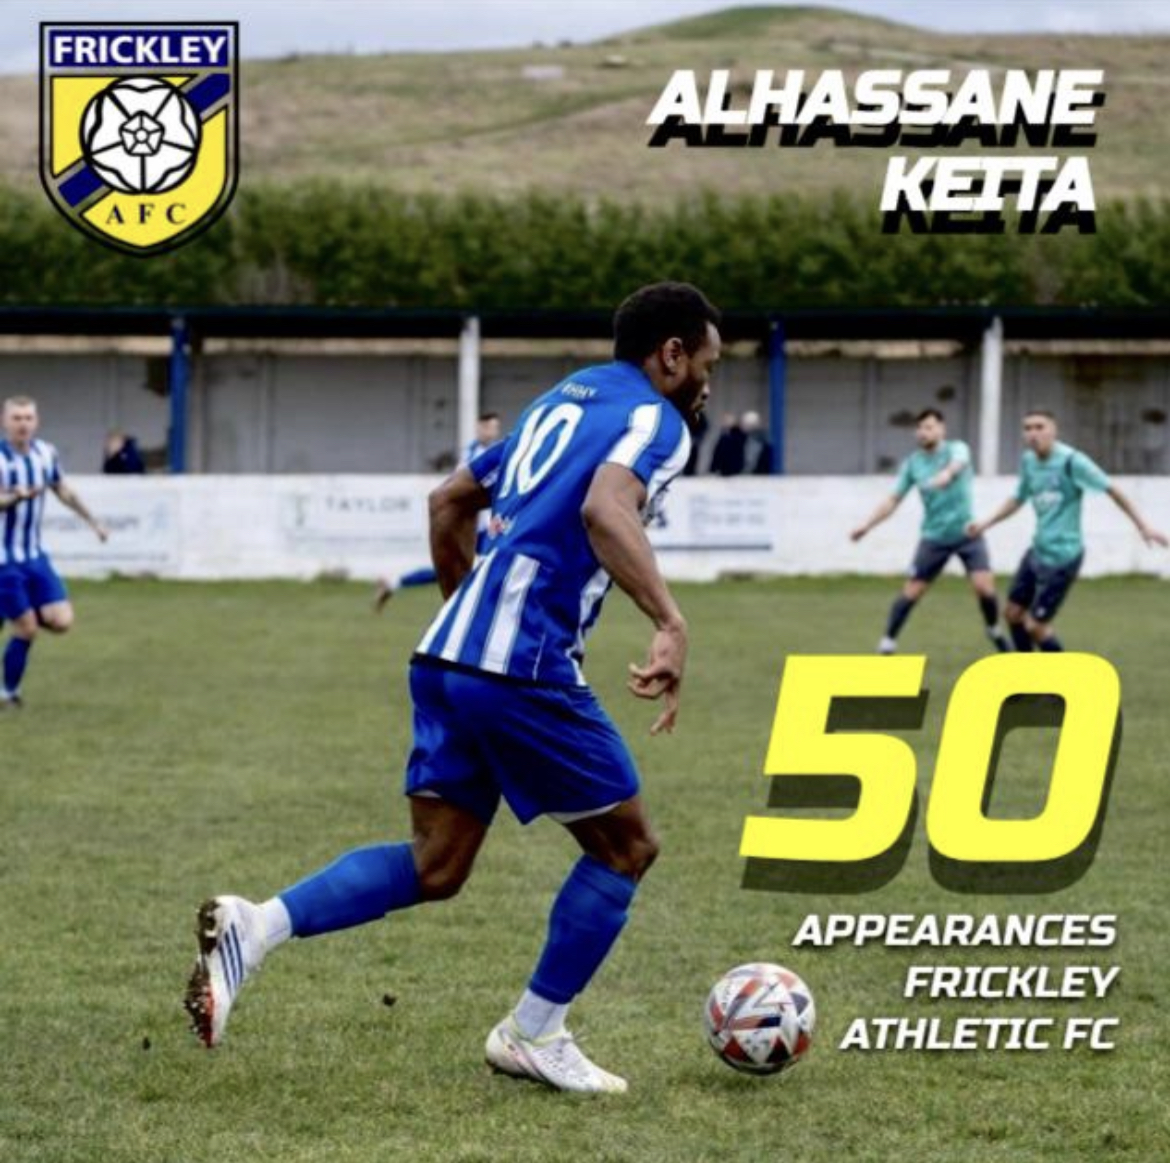 50 Appearances for Alhassane Keita